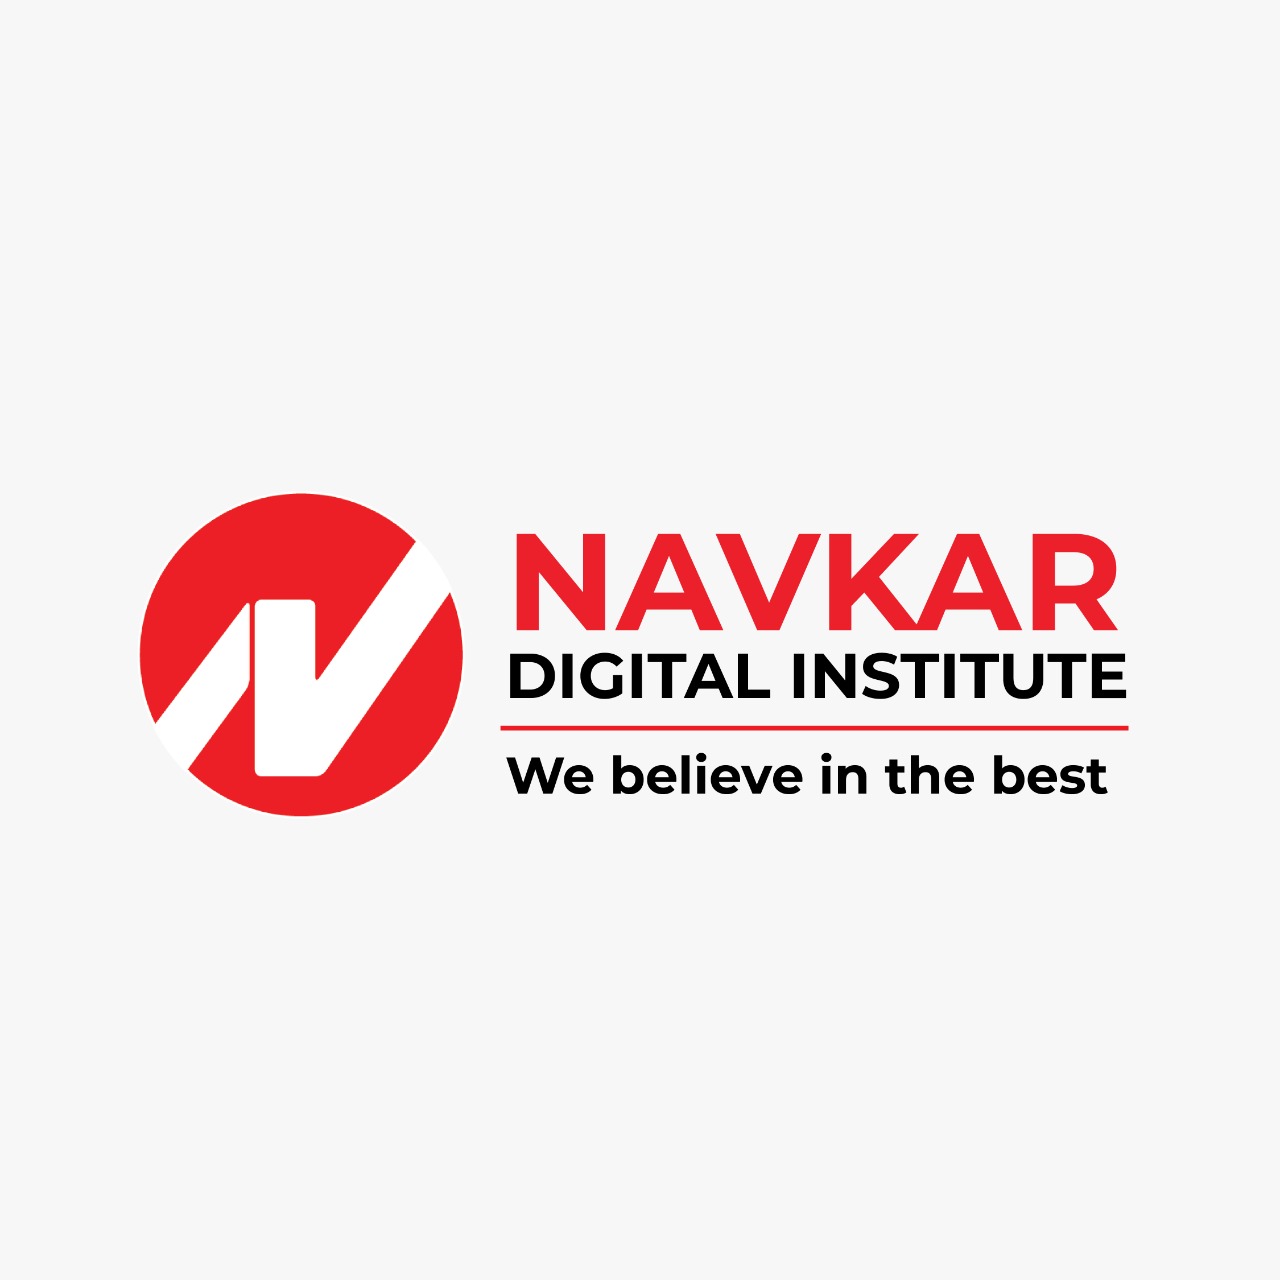 Navkar Digital Institute logo